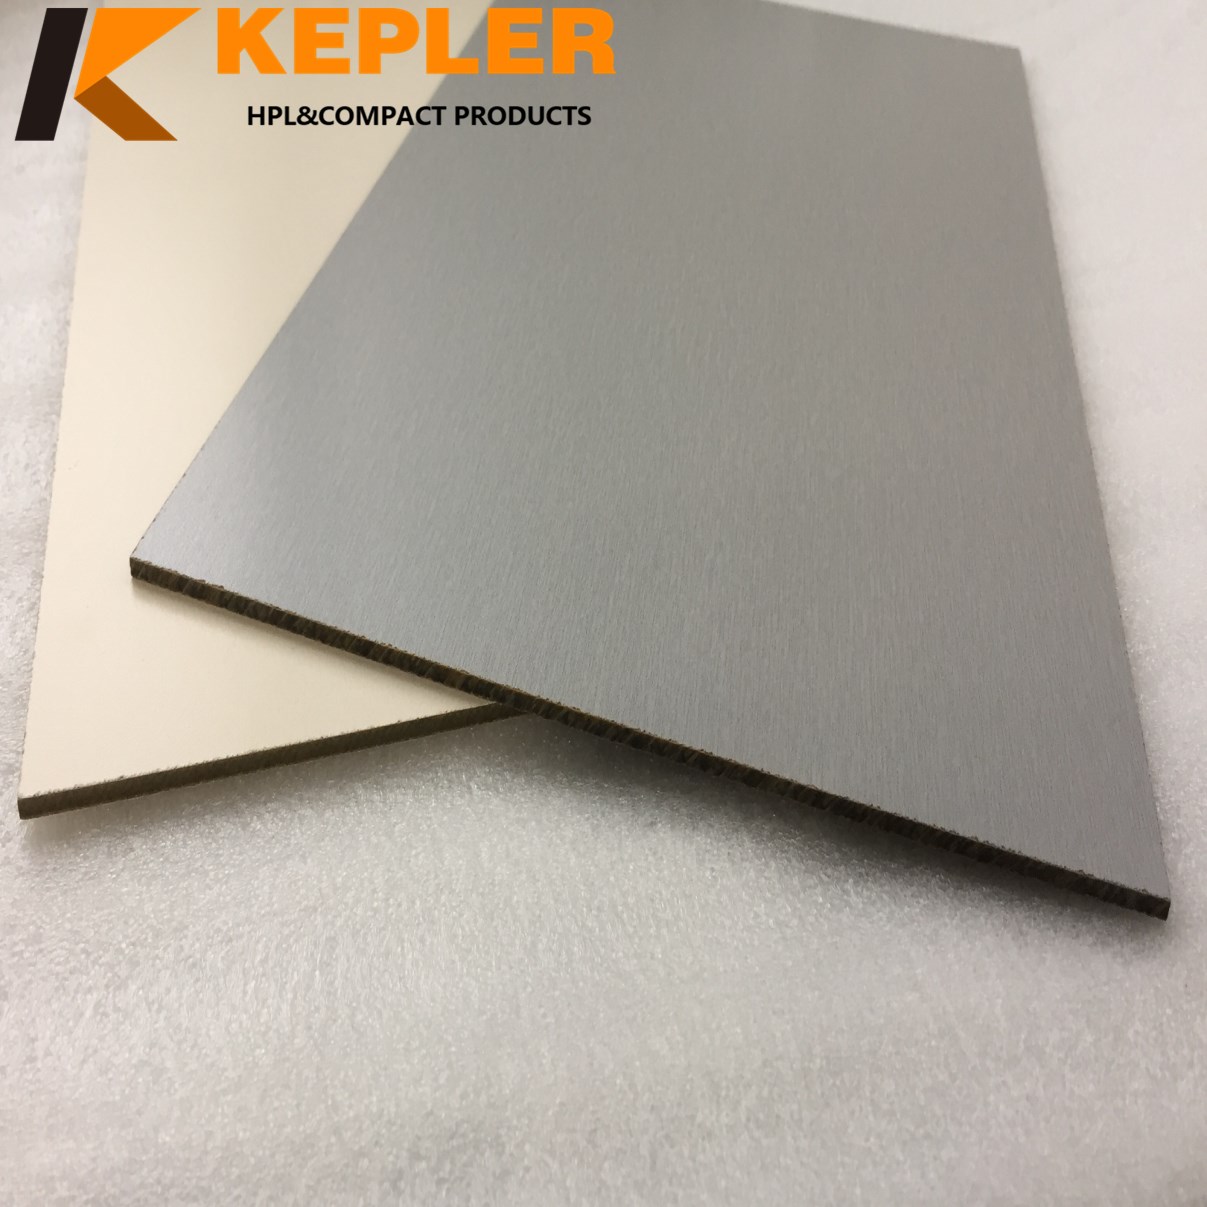 Kepler 3mm thickness hpl board matt surface double side finishing phenolic compact laminate panel manufacturer